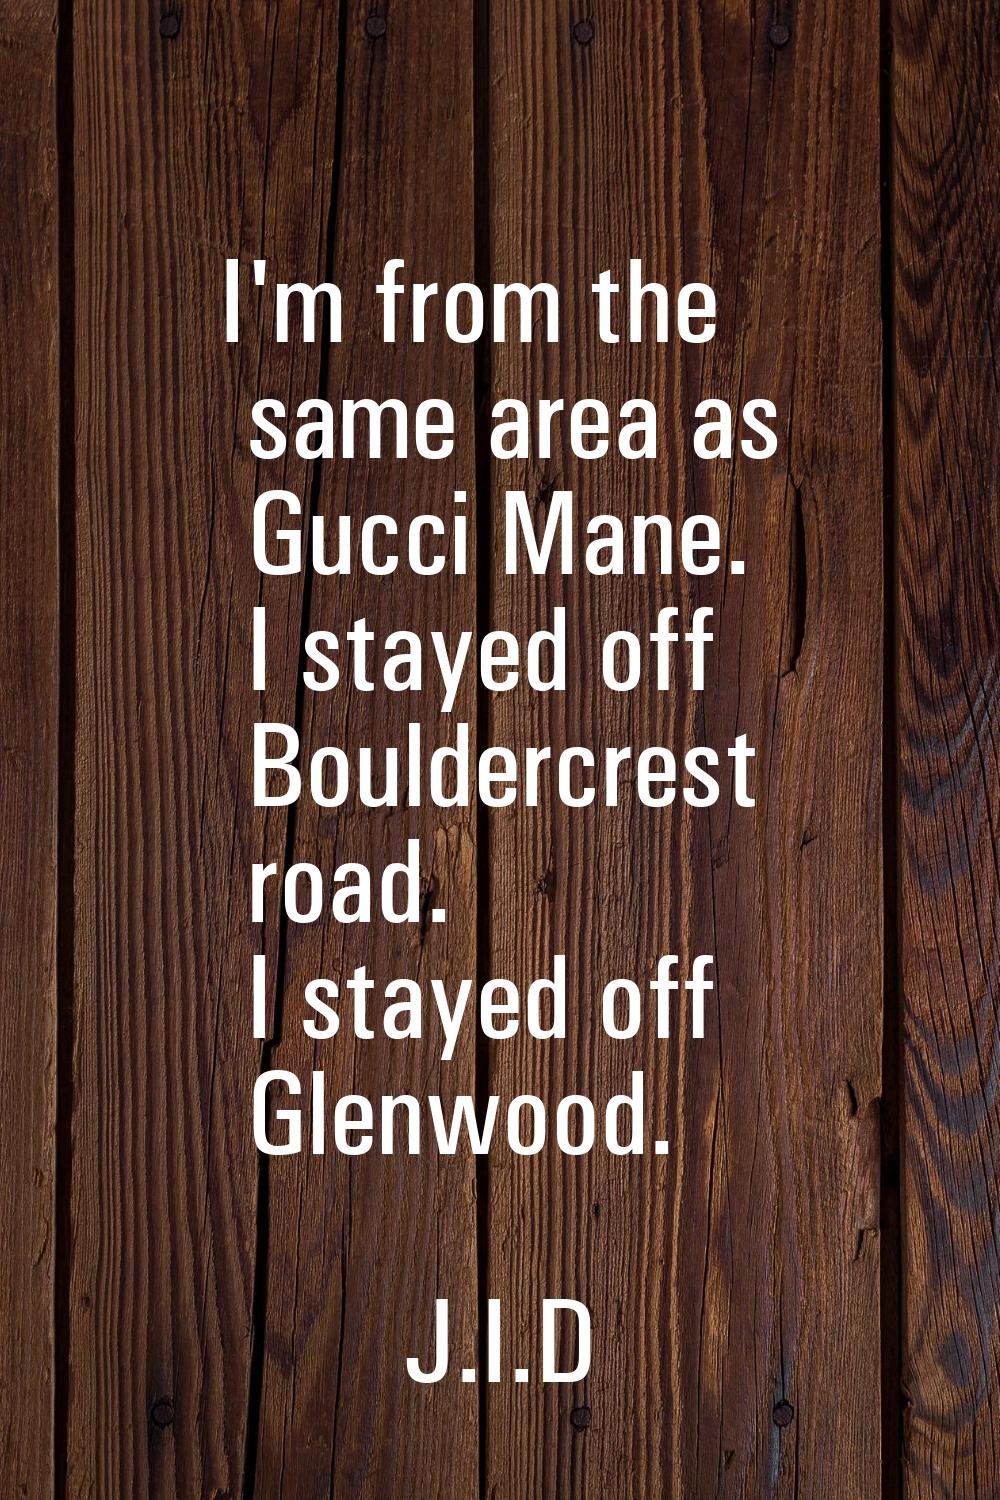 I'm from the same area as Gucci Mane. I stayed off Bouldercrest road. I stayed off Glenwood.